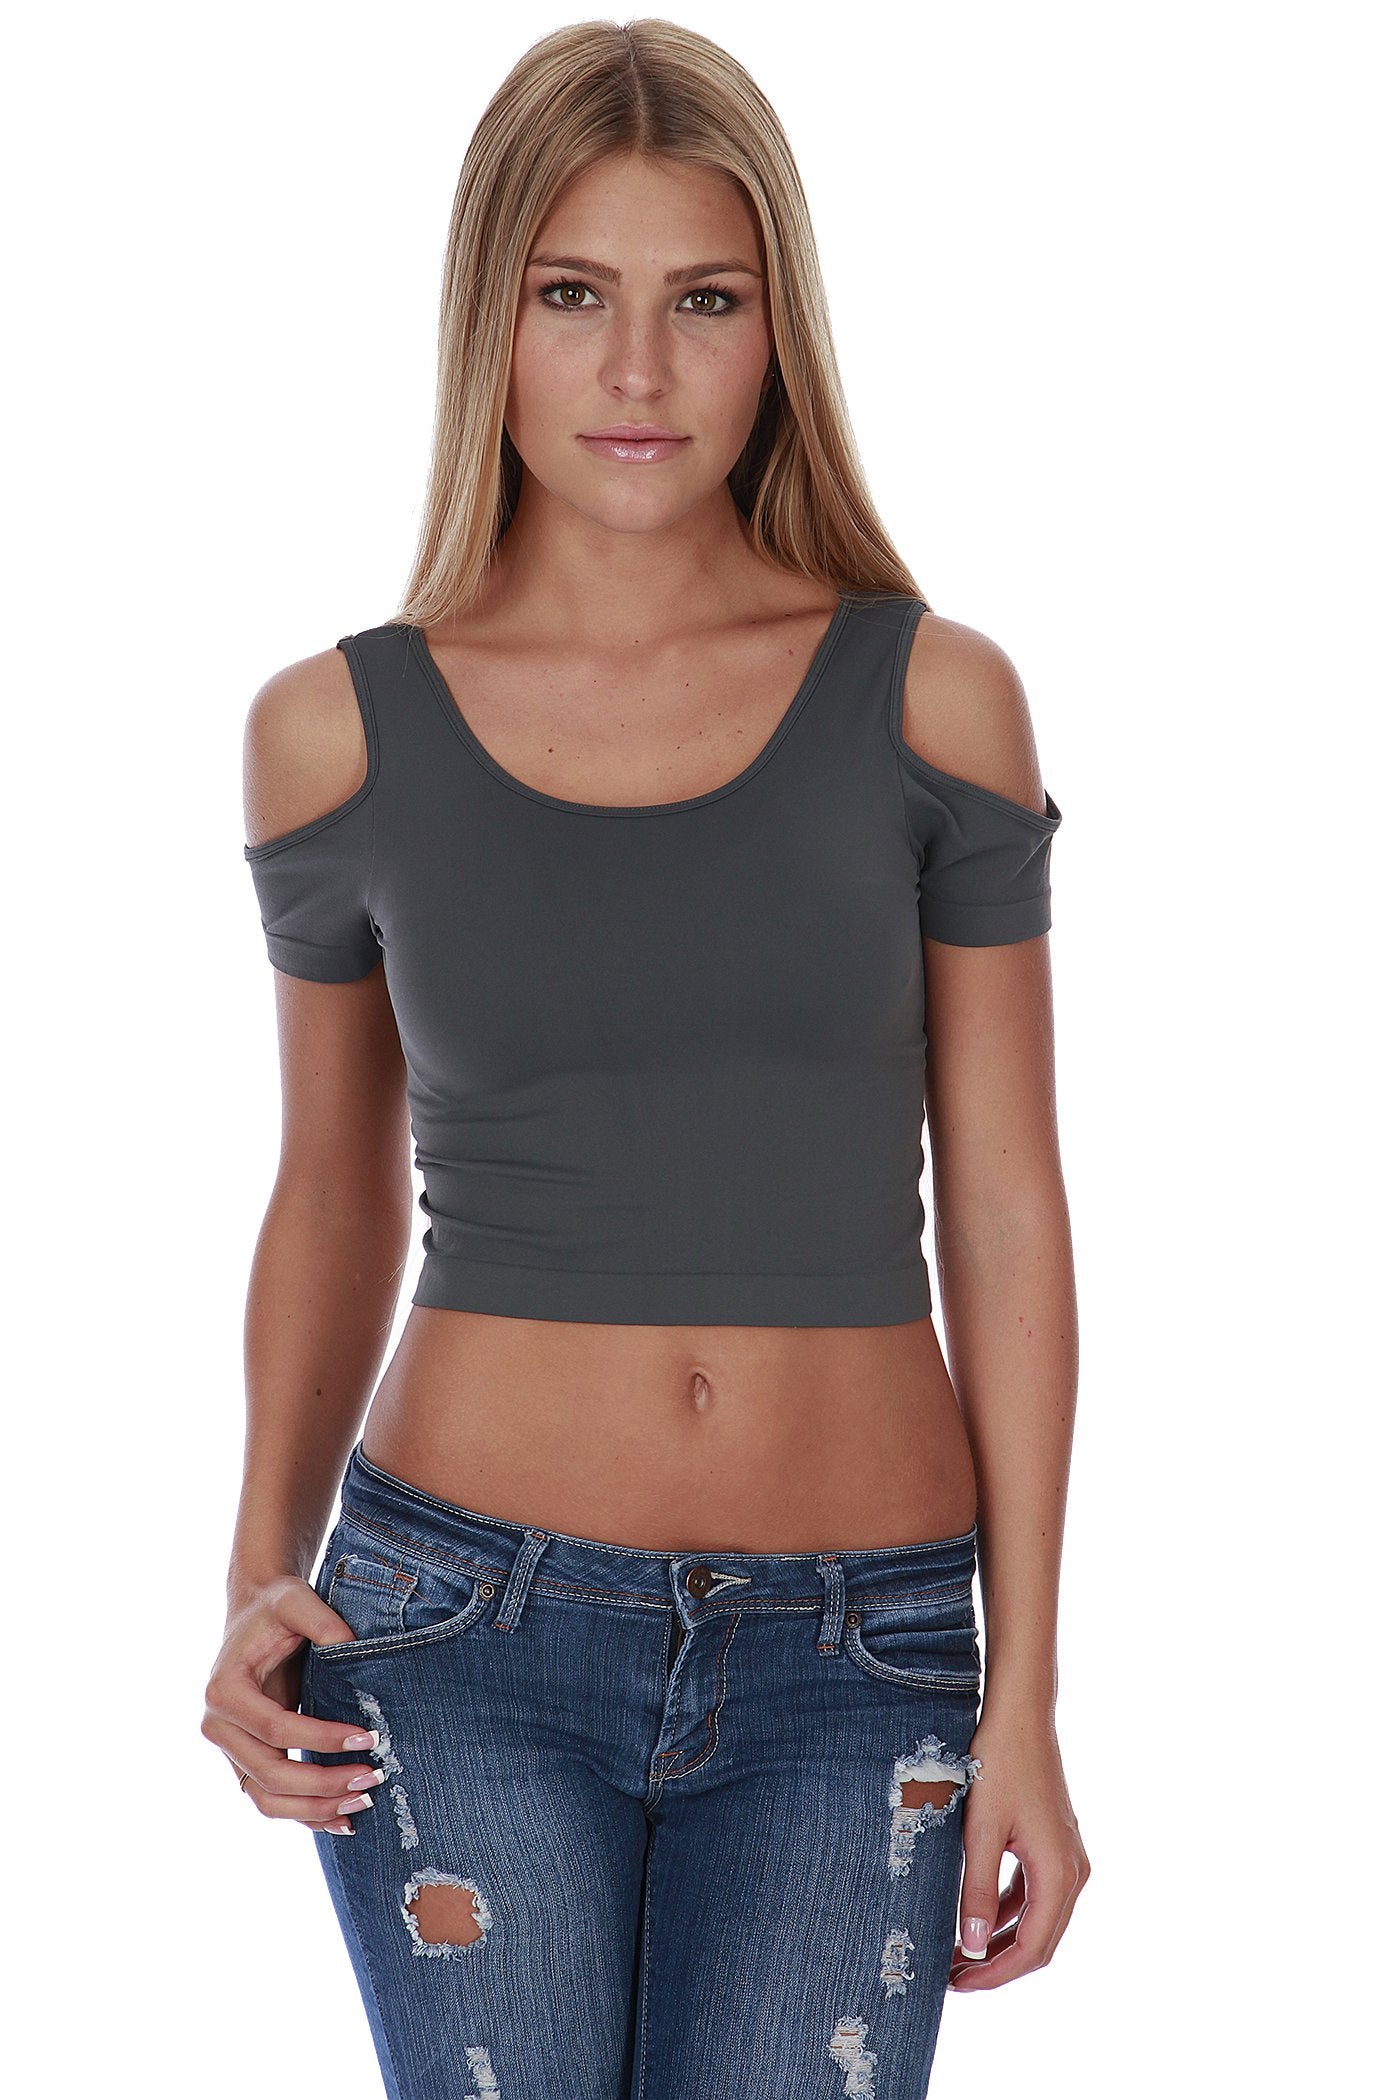 Hollywood Star Fashion Women's Cut-Out Shoulder Crop Top Tank Seamless Shirt